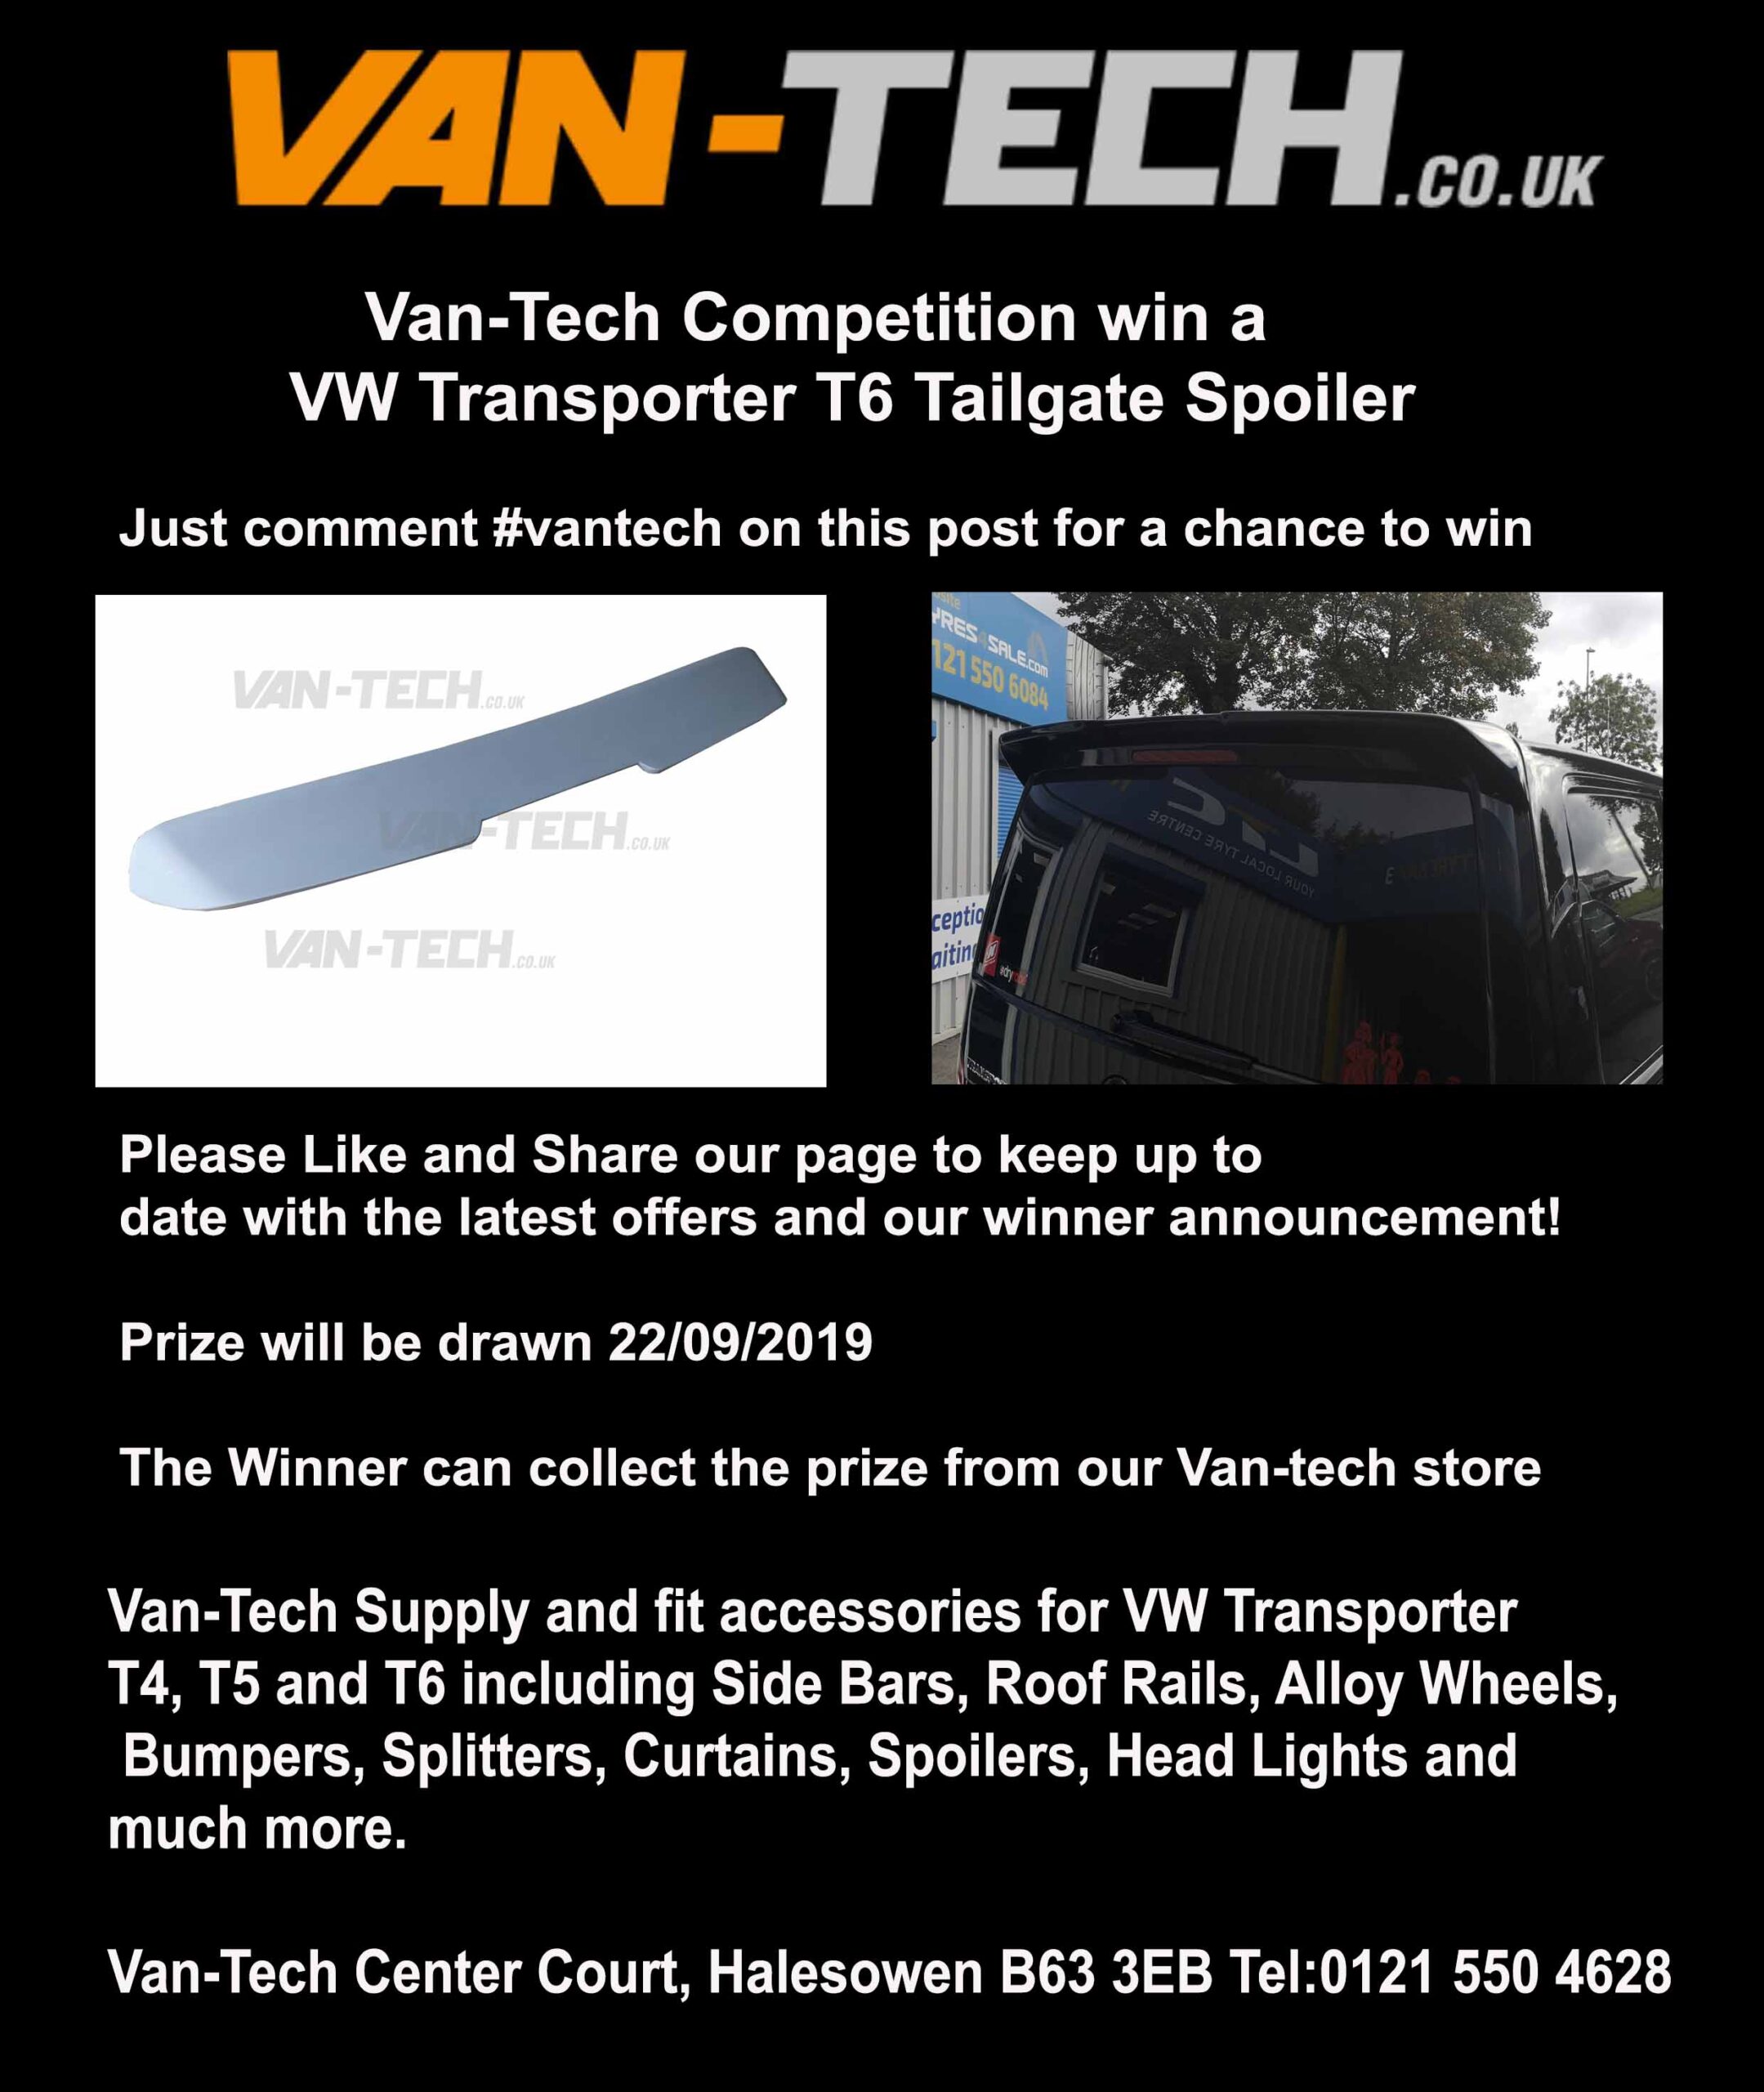 Van-Tech Competition win